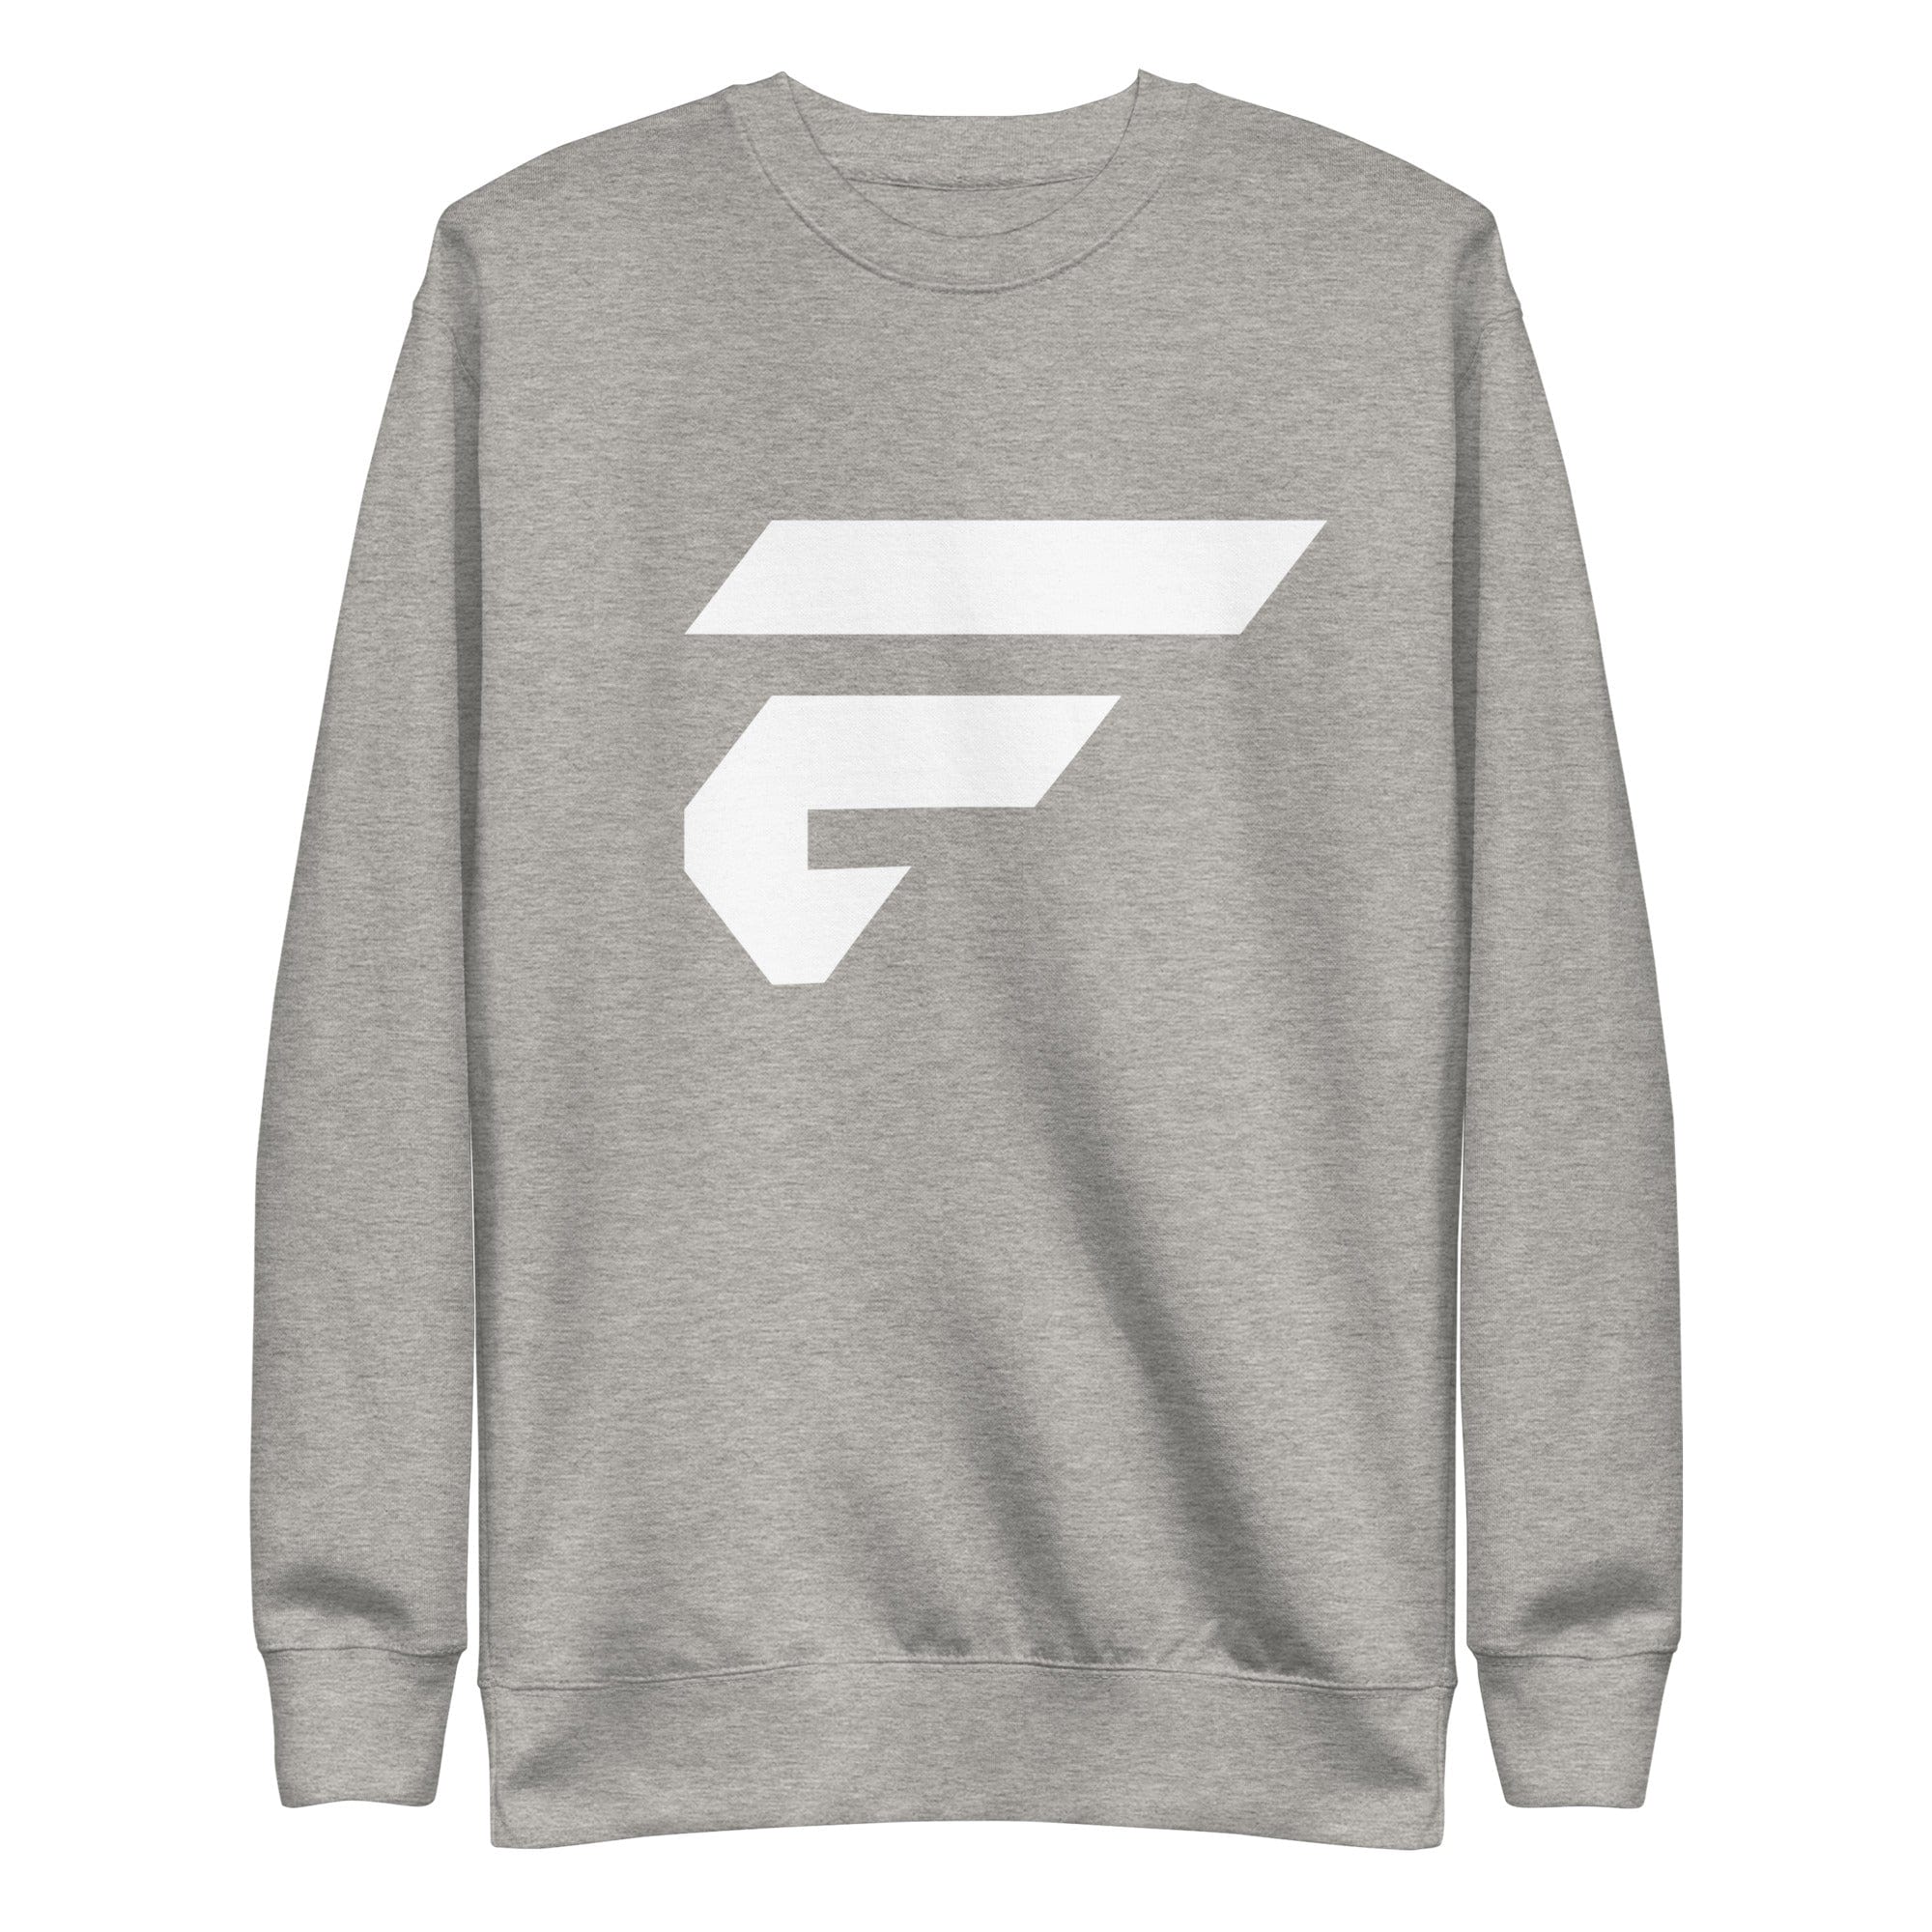 Heathered grey unisex sweatshirt with Fire Cornhole F logo in white